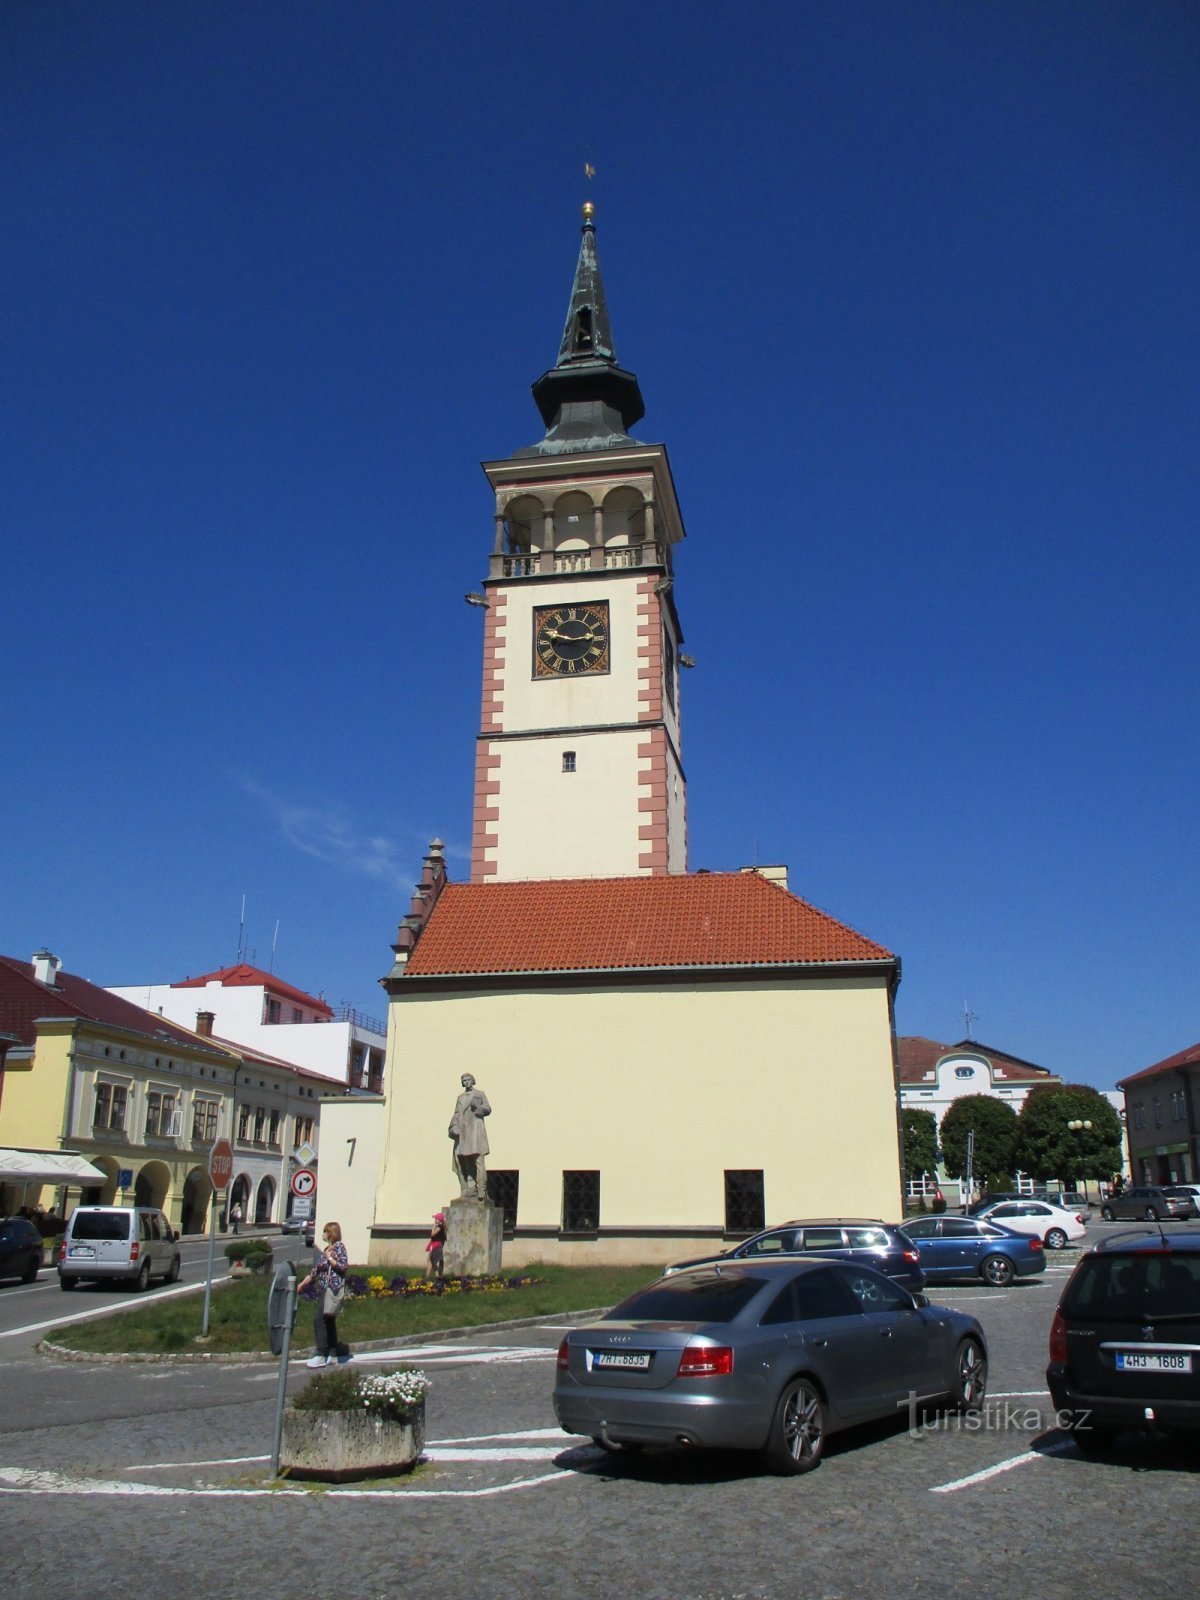 Torre del Ayuntamiento (Dobruška, 18.5.2020/XNUMX/XNUMX)